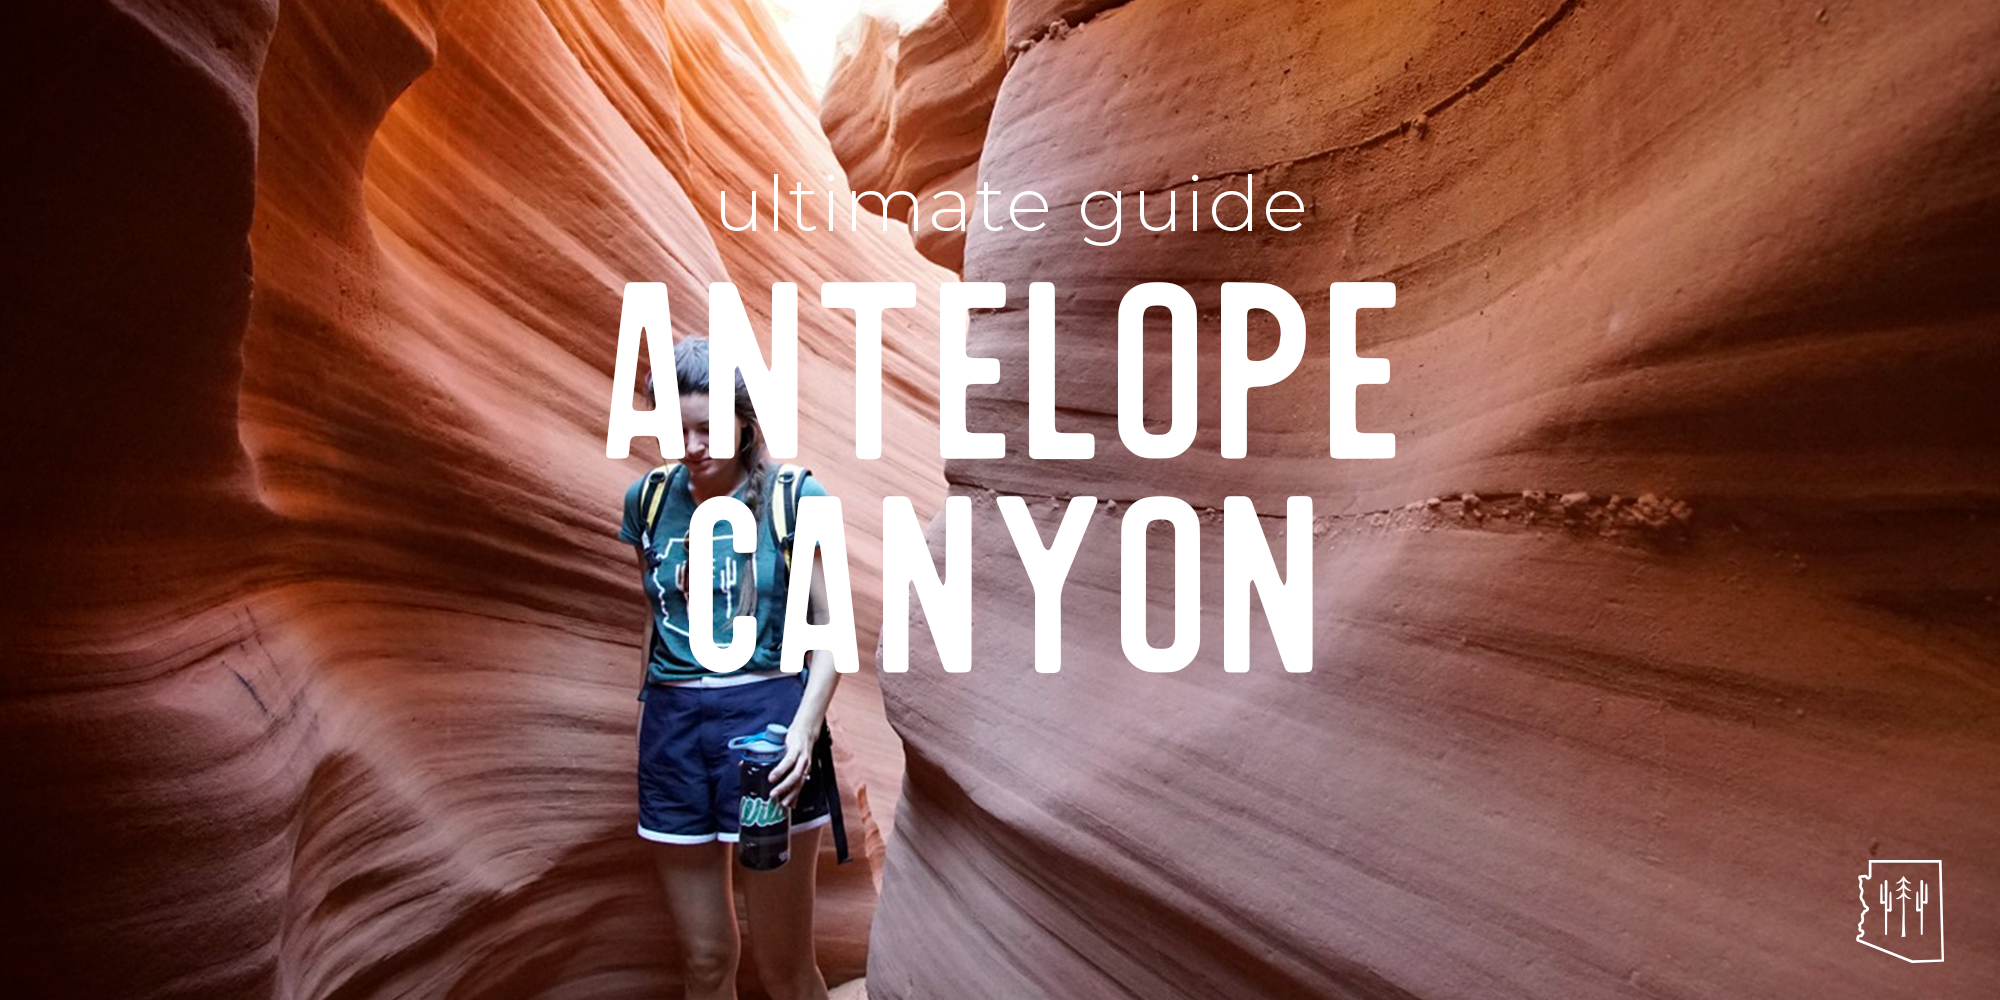 antelope canyon tour directions